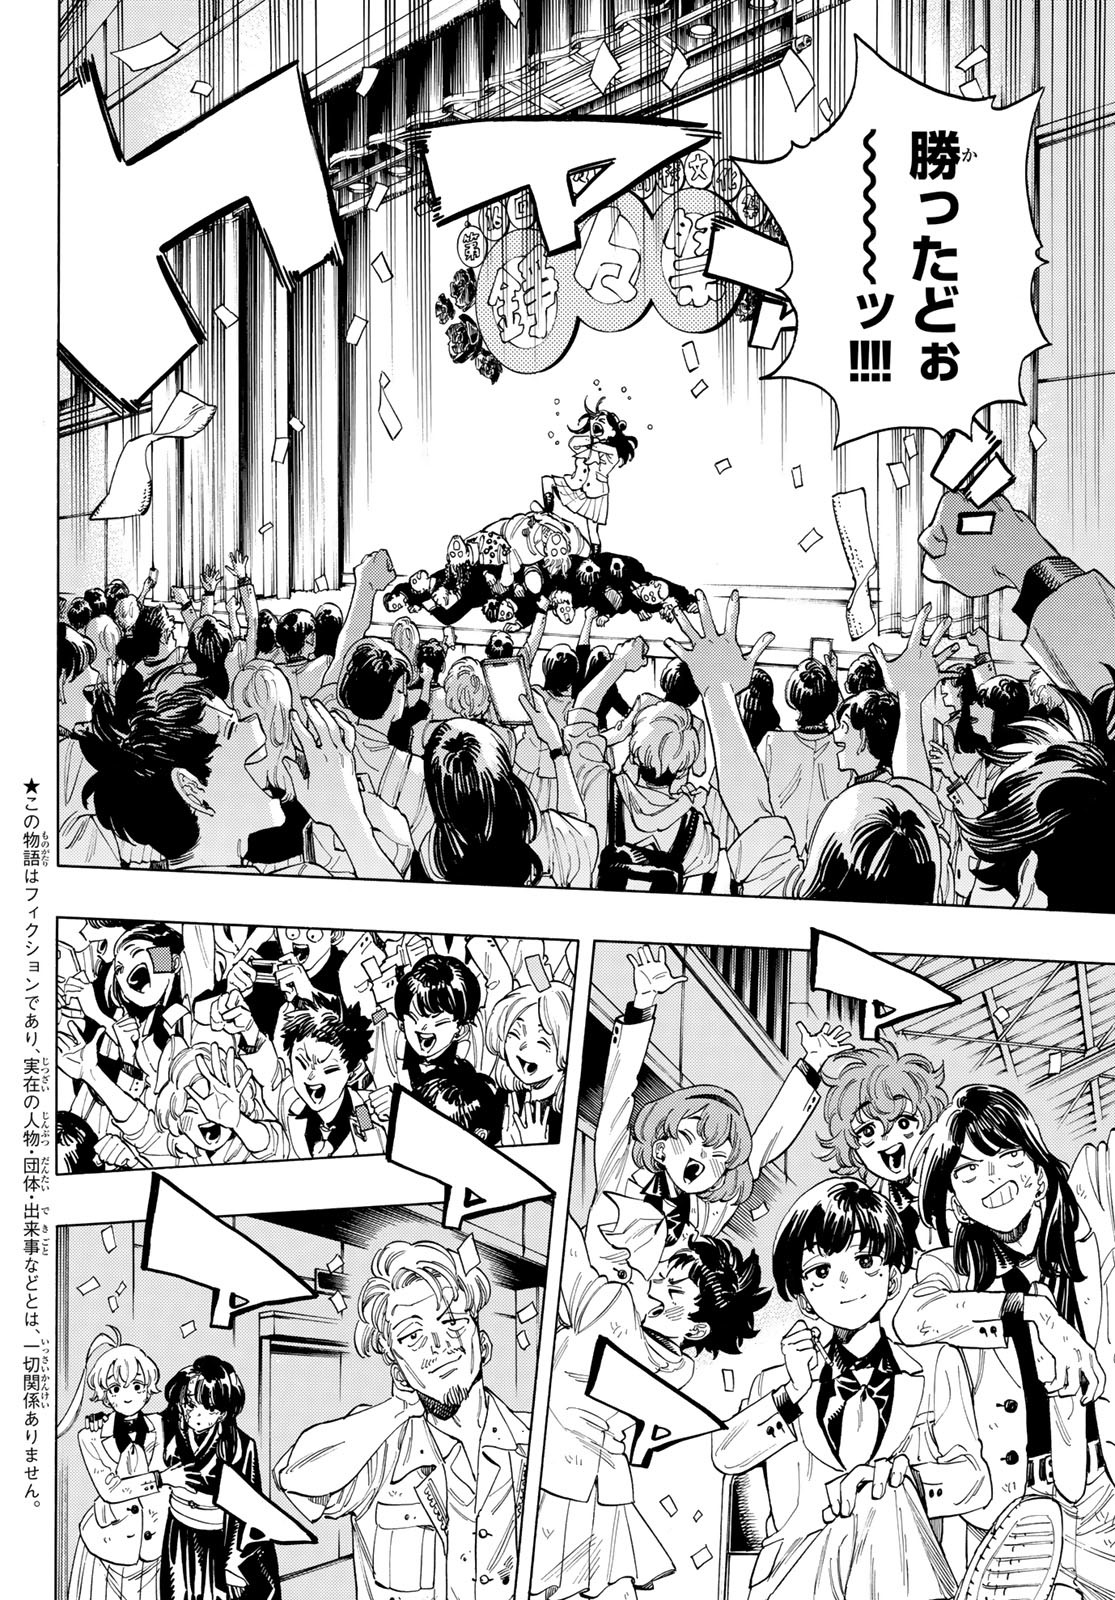 Akabane Honeko no Bodyguard - Chapter 64 - Page 2